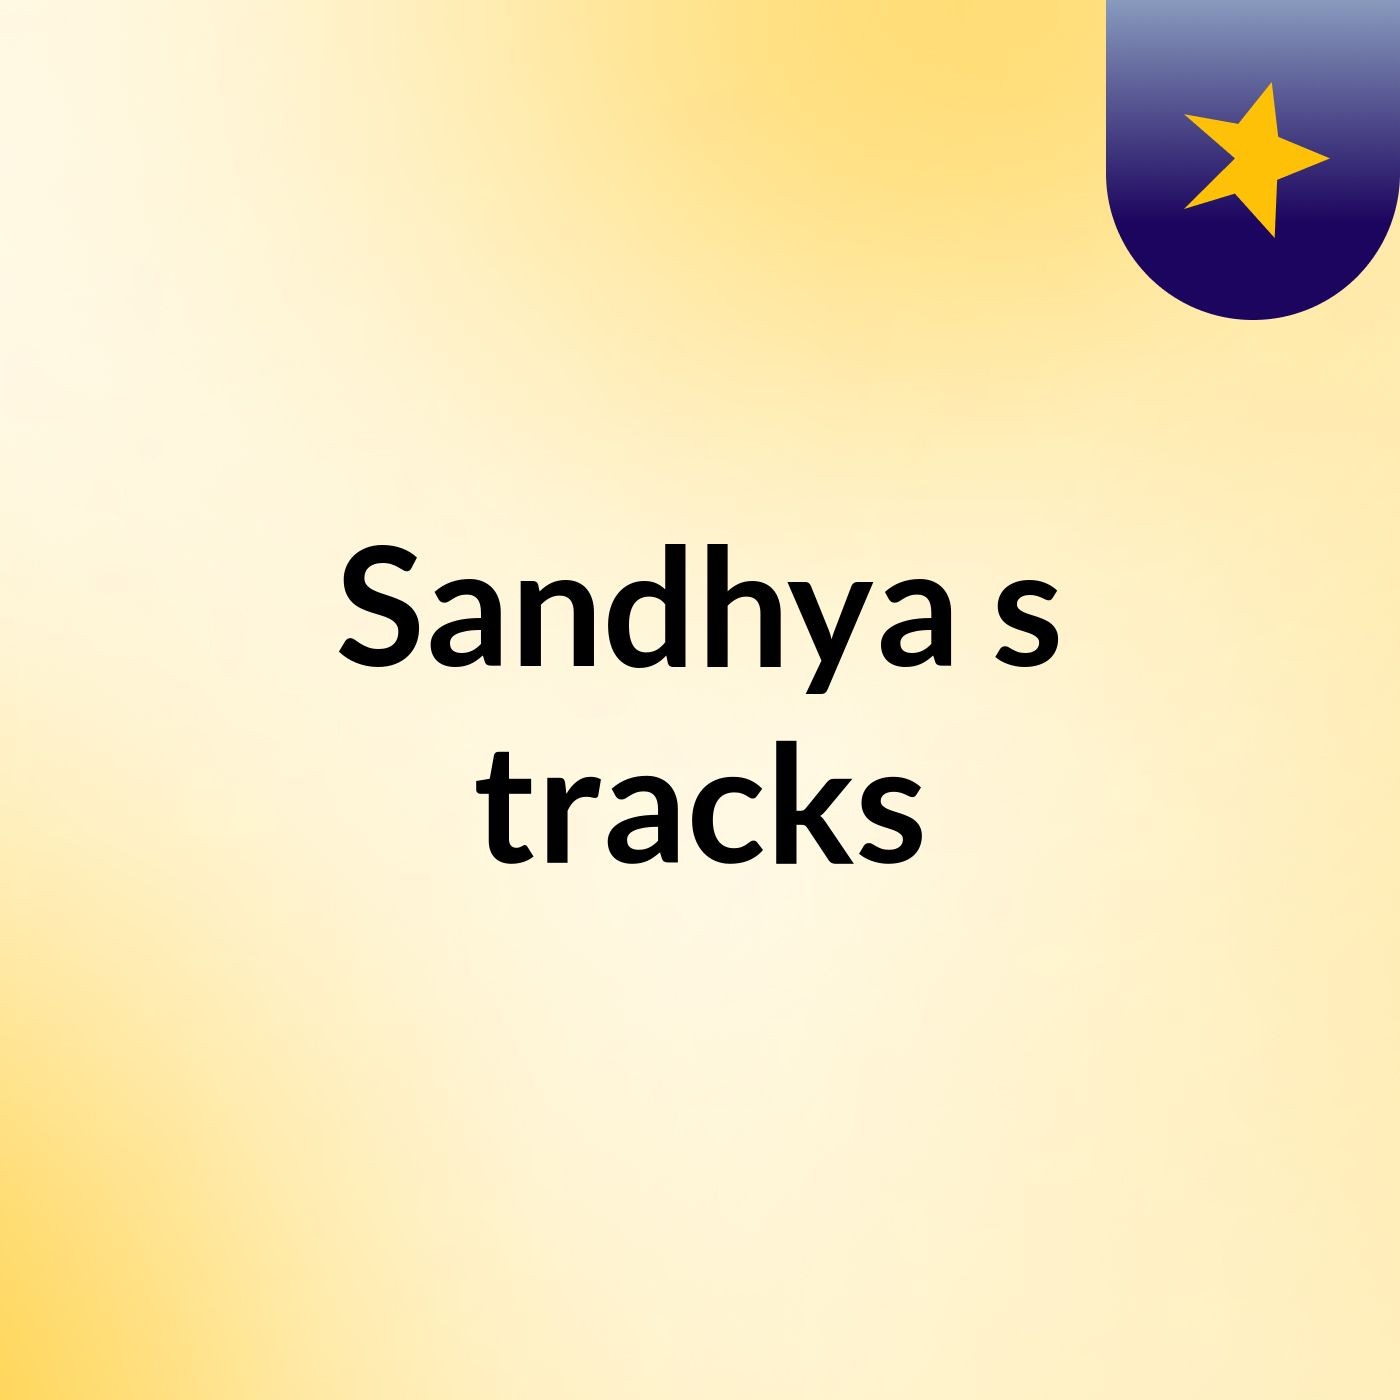 Sandhya's tracks